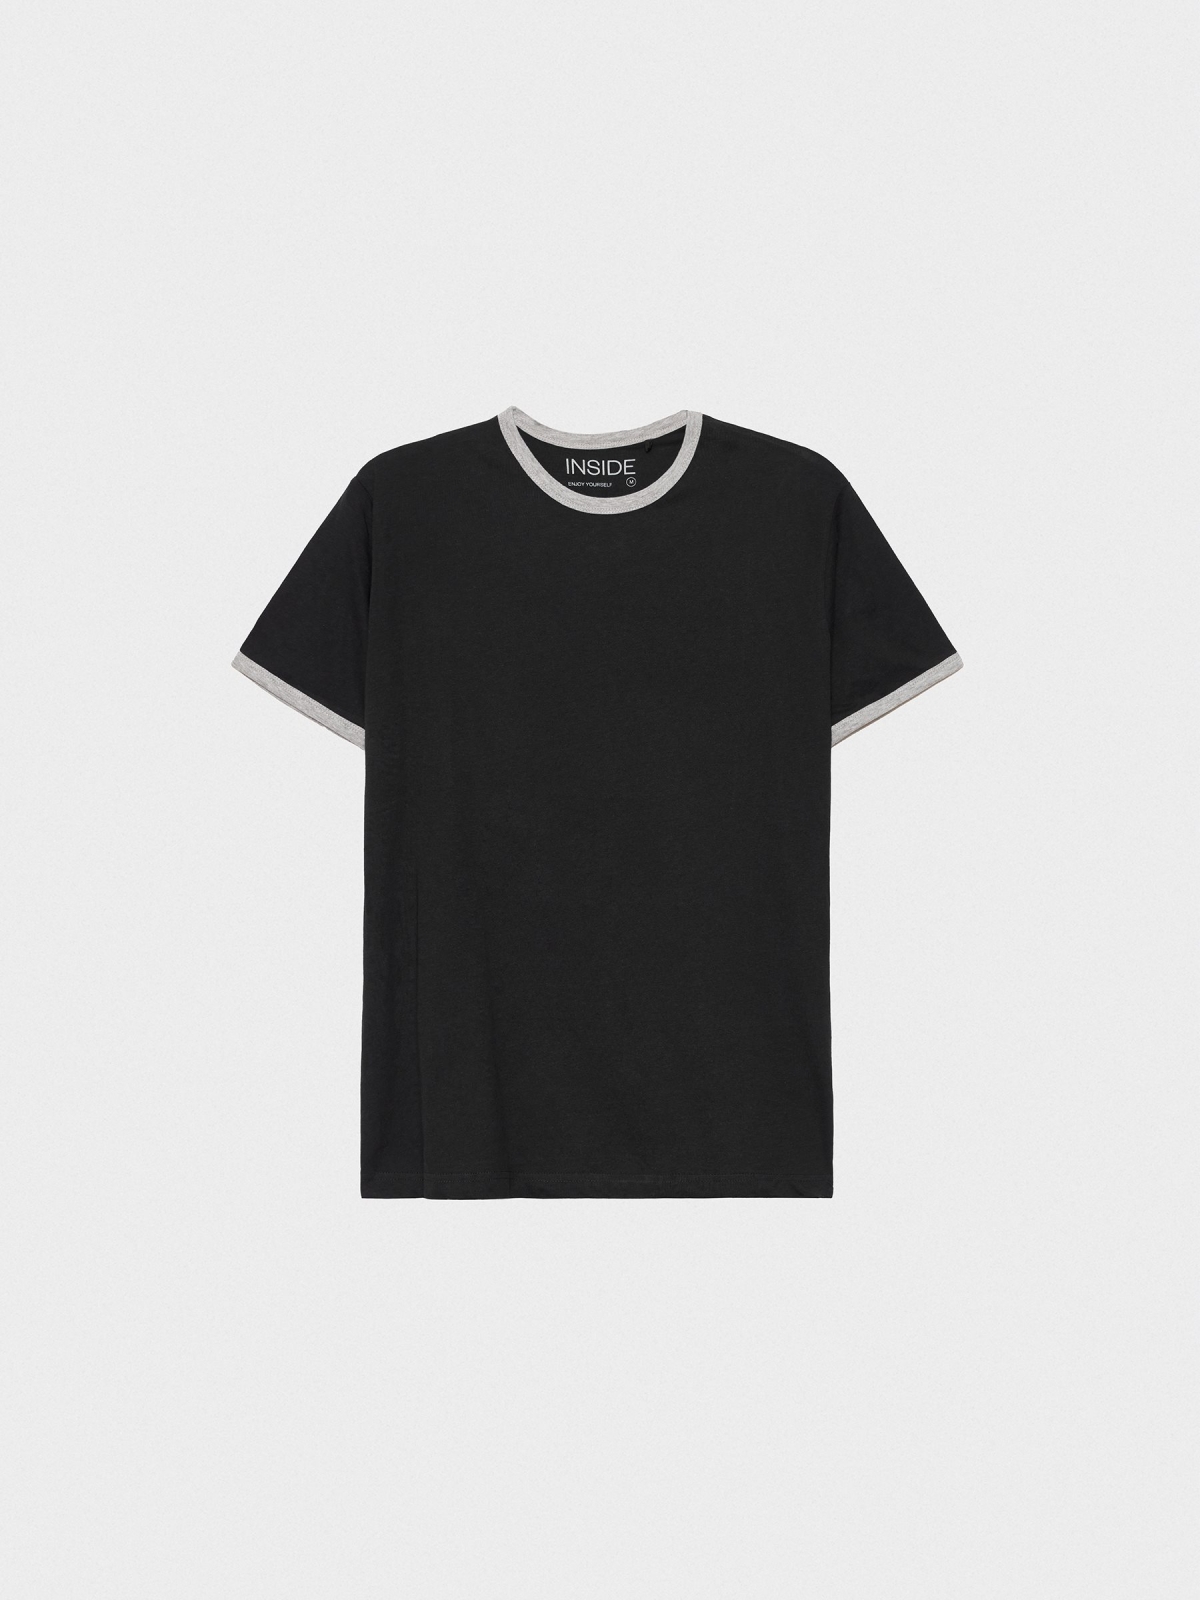  Basic T-shirt contrasts black